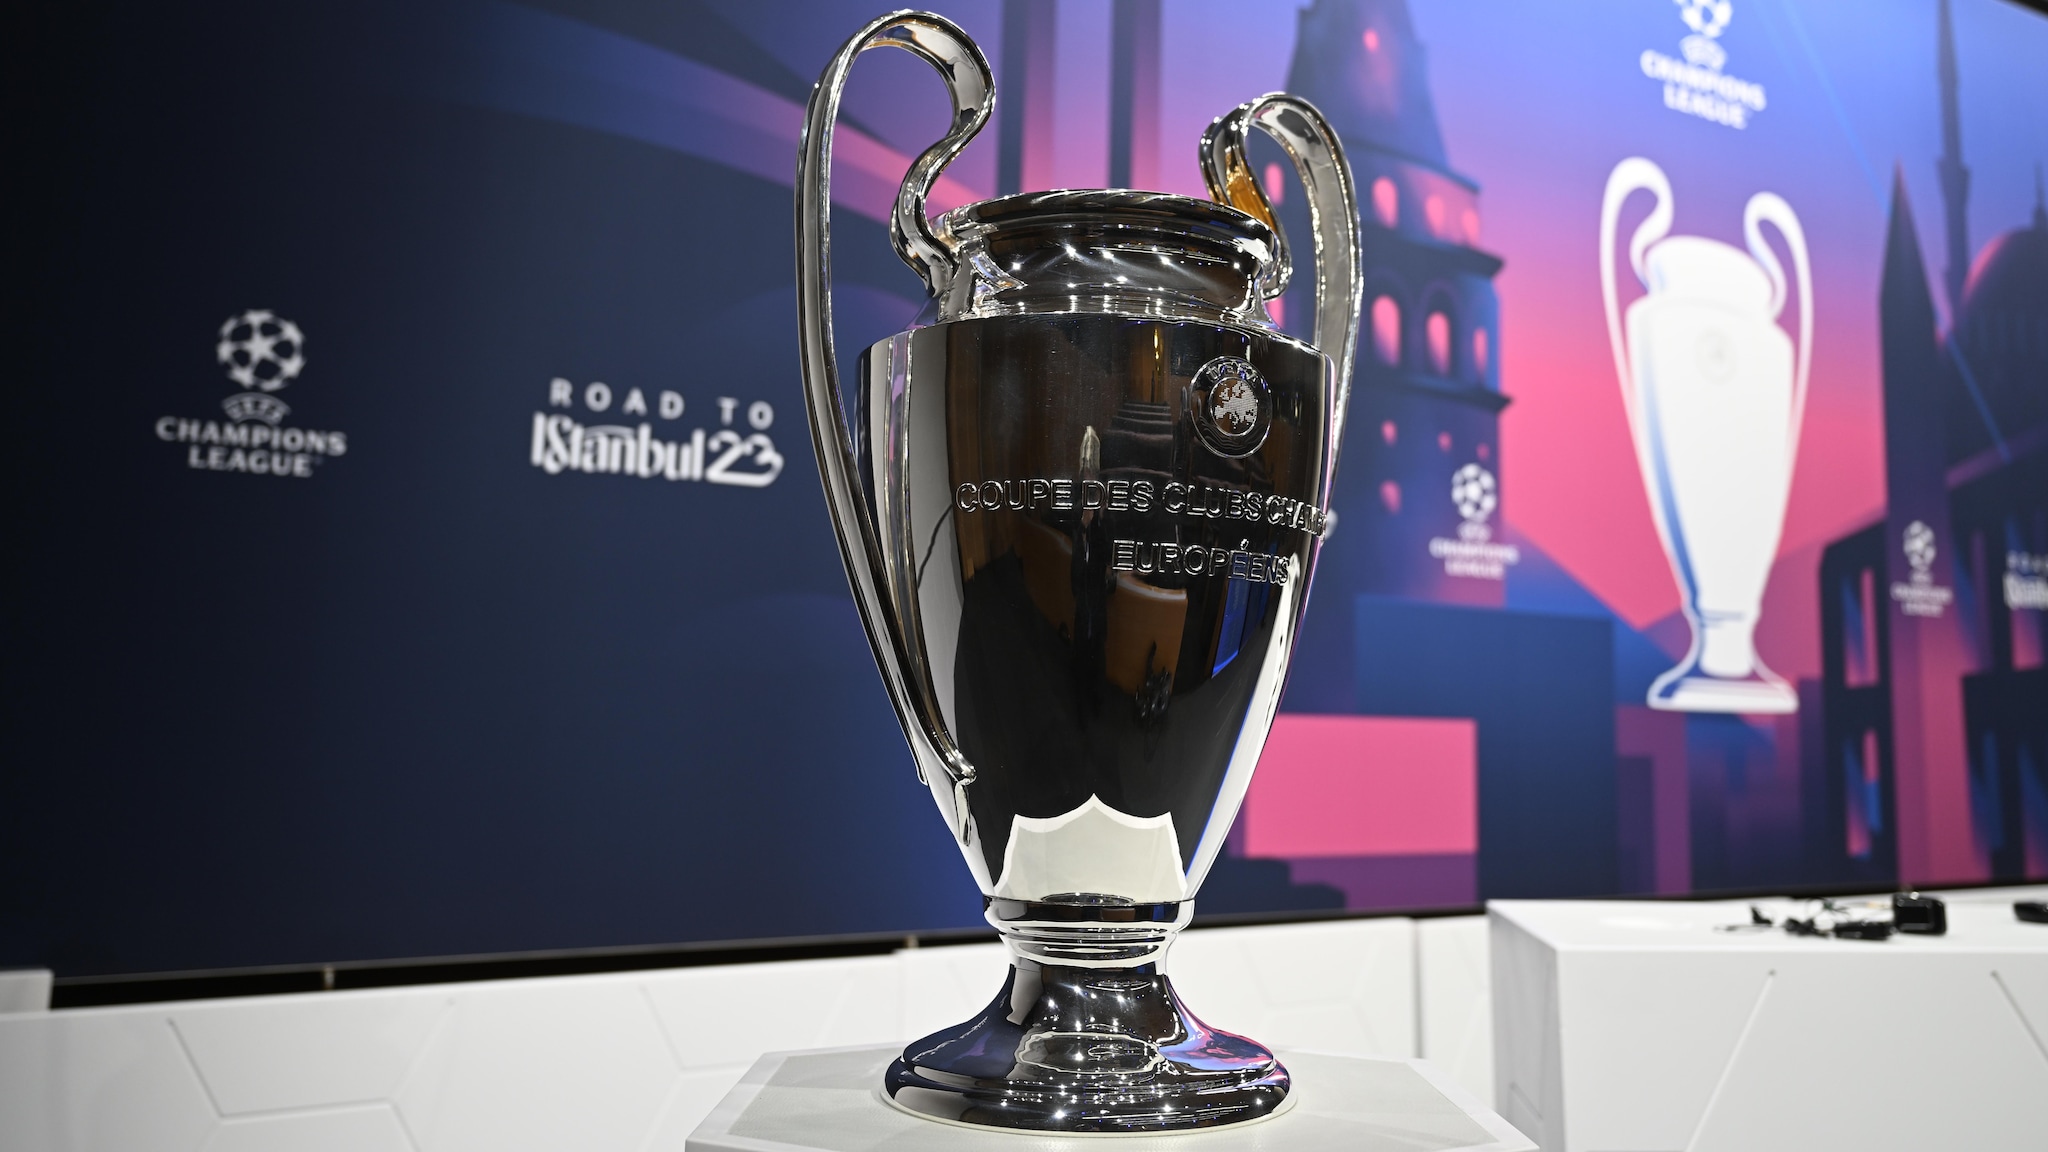 Champions League round of 16 draw | UEFA Champions League 2022/23 | UEFA.com